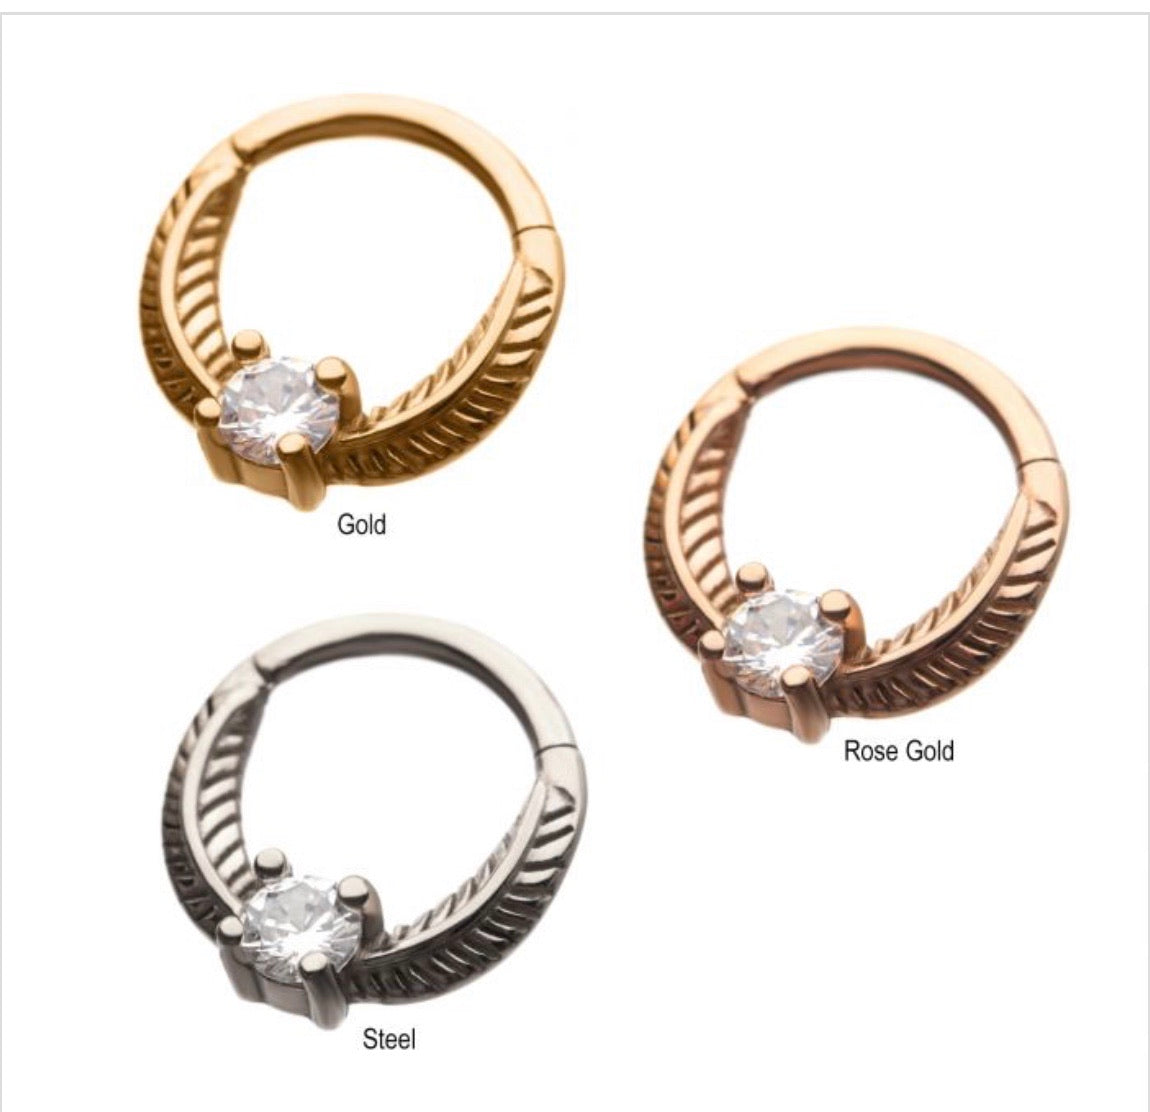 Feather ring - Monique Fashion Accessories